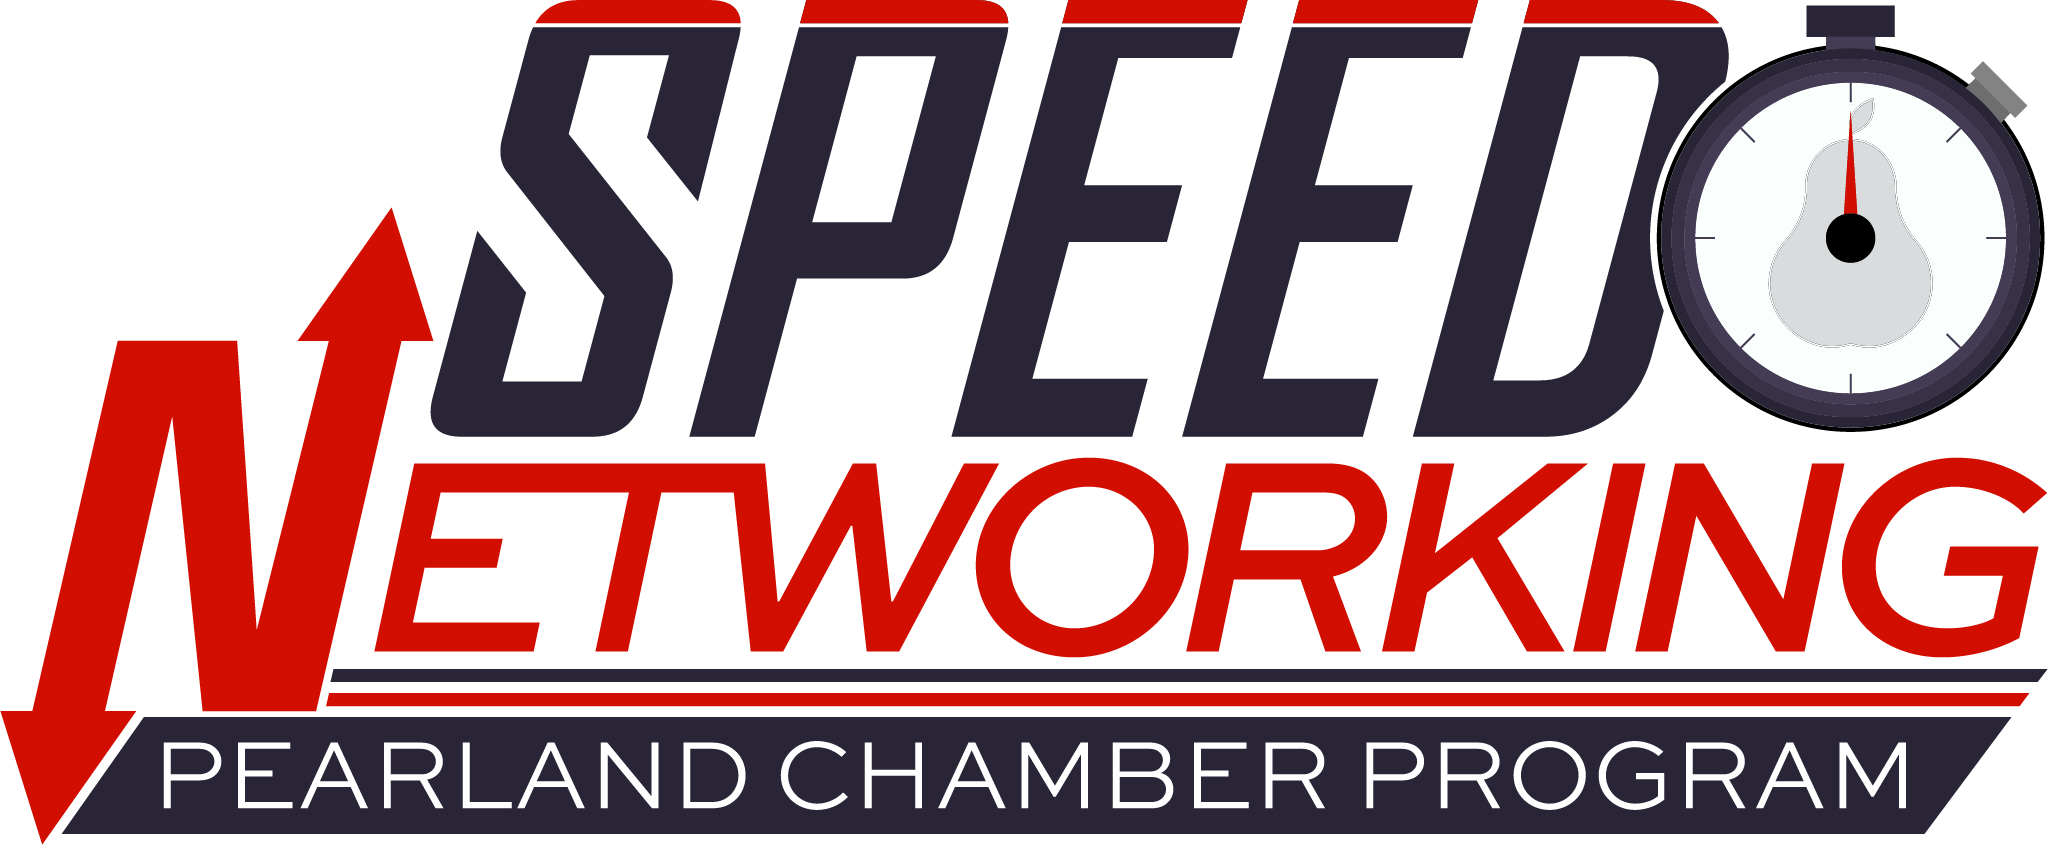 Speed Networking Logo